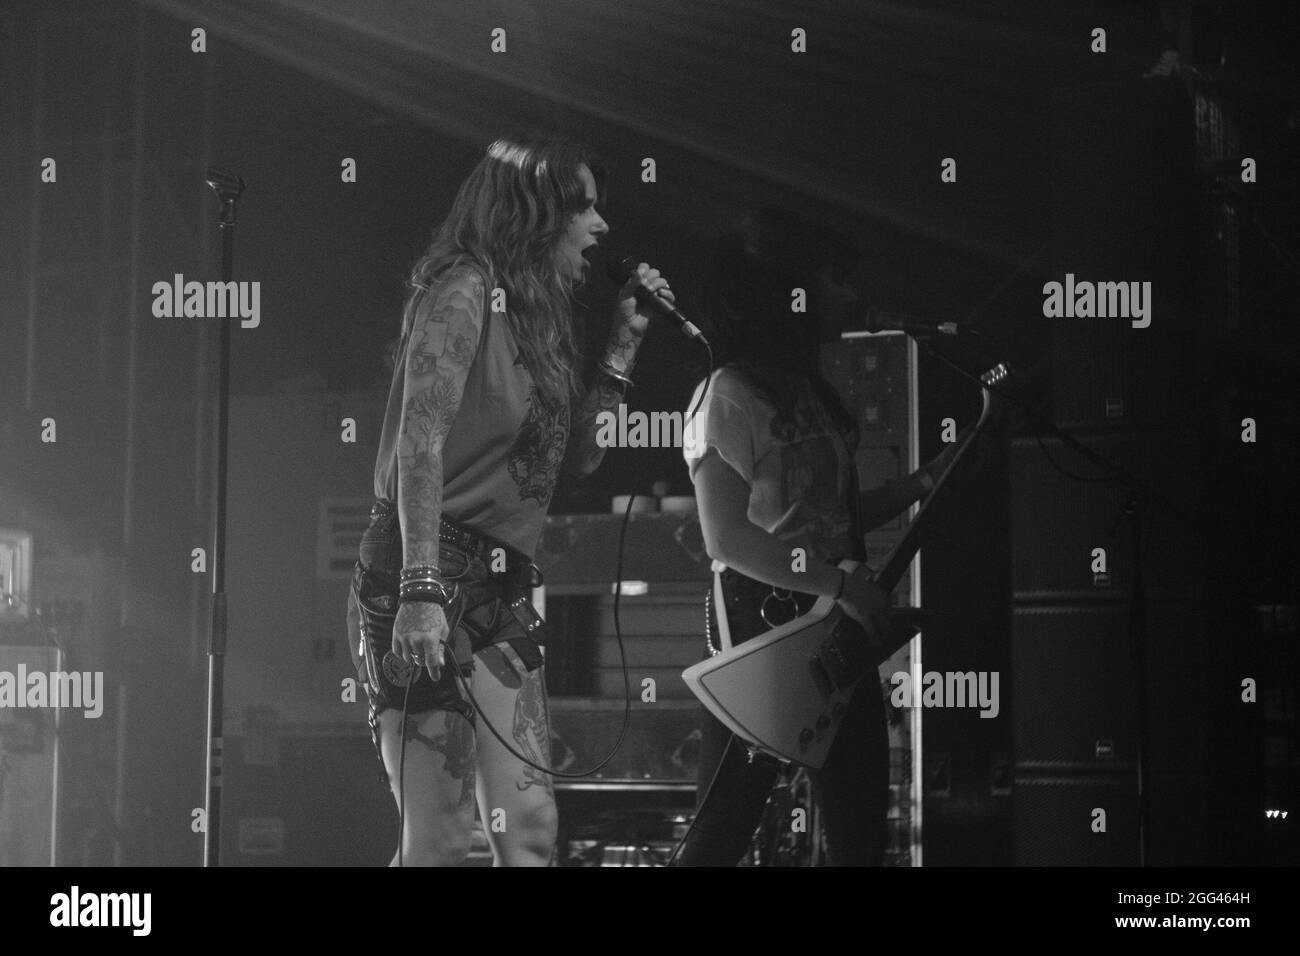 Vulvarine während des Social Distancing Konzerts im Backstage München. Kredit: SPP Sport Pressefoto. /Alamy Live News Stockfoto